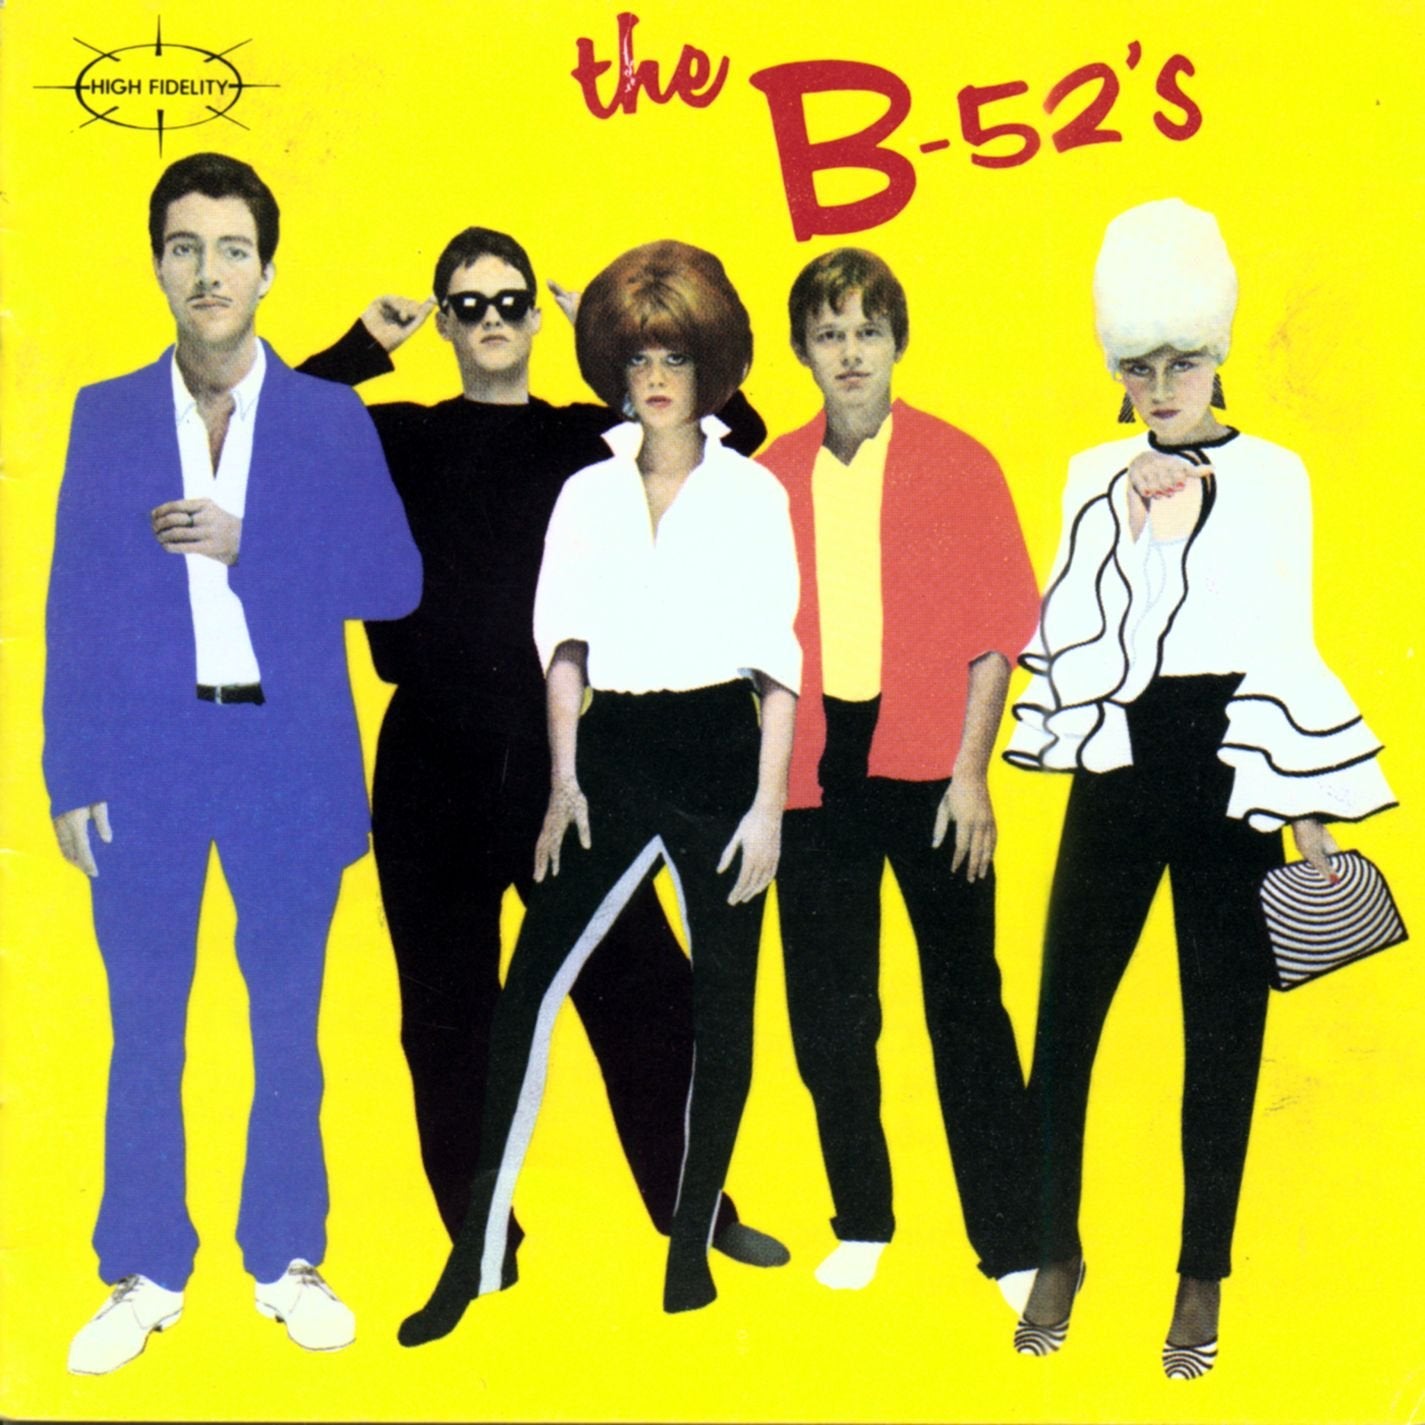 THE B-52'S - THE B-52'S - VINYL LP - Wah Wah Records